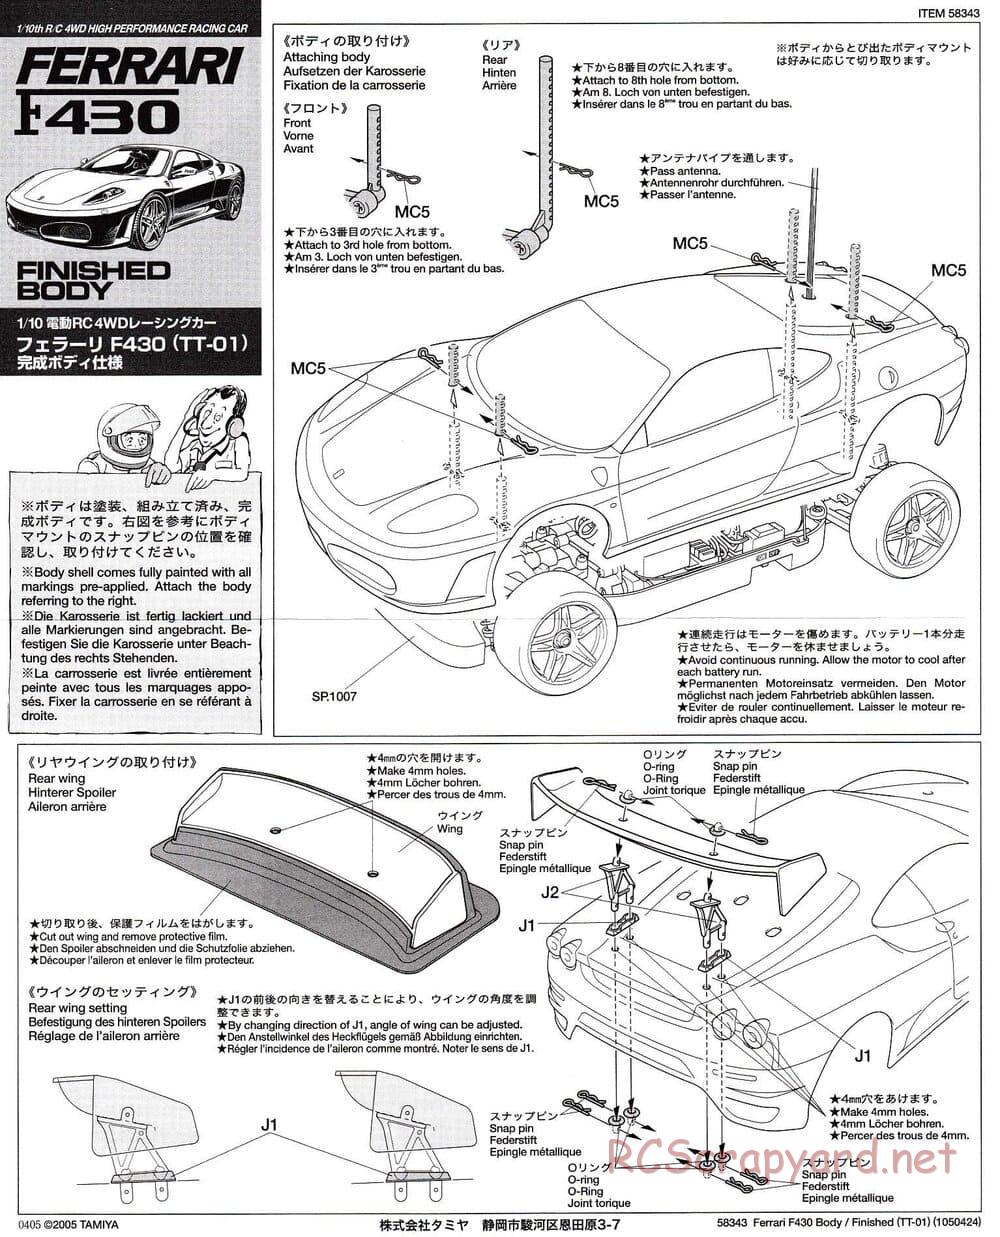 Tamiya - Ferrari F430 - TT-01 Chassis - Body Manual - Page 1